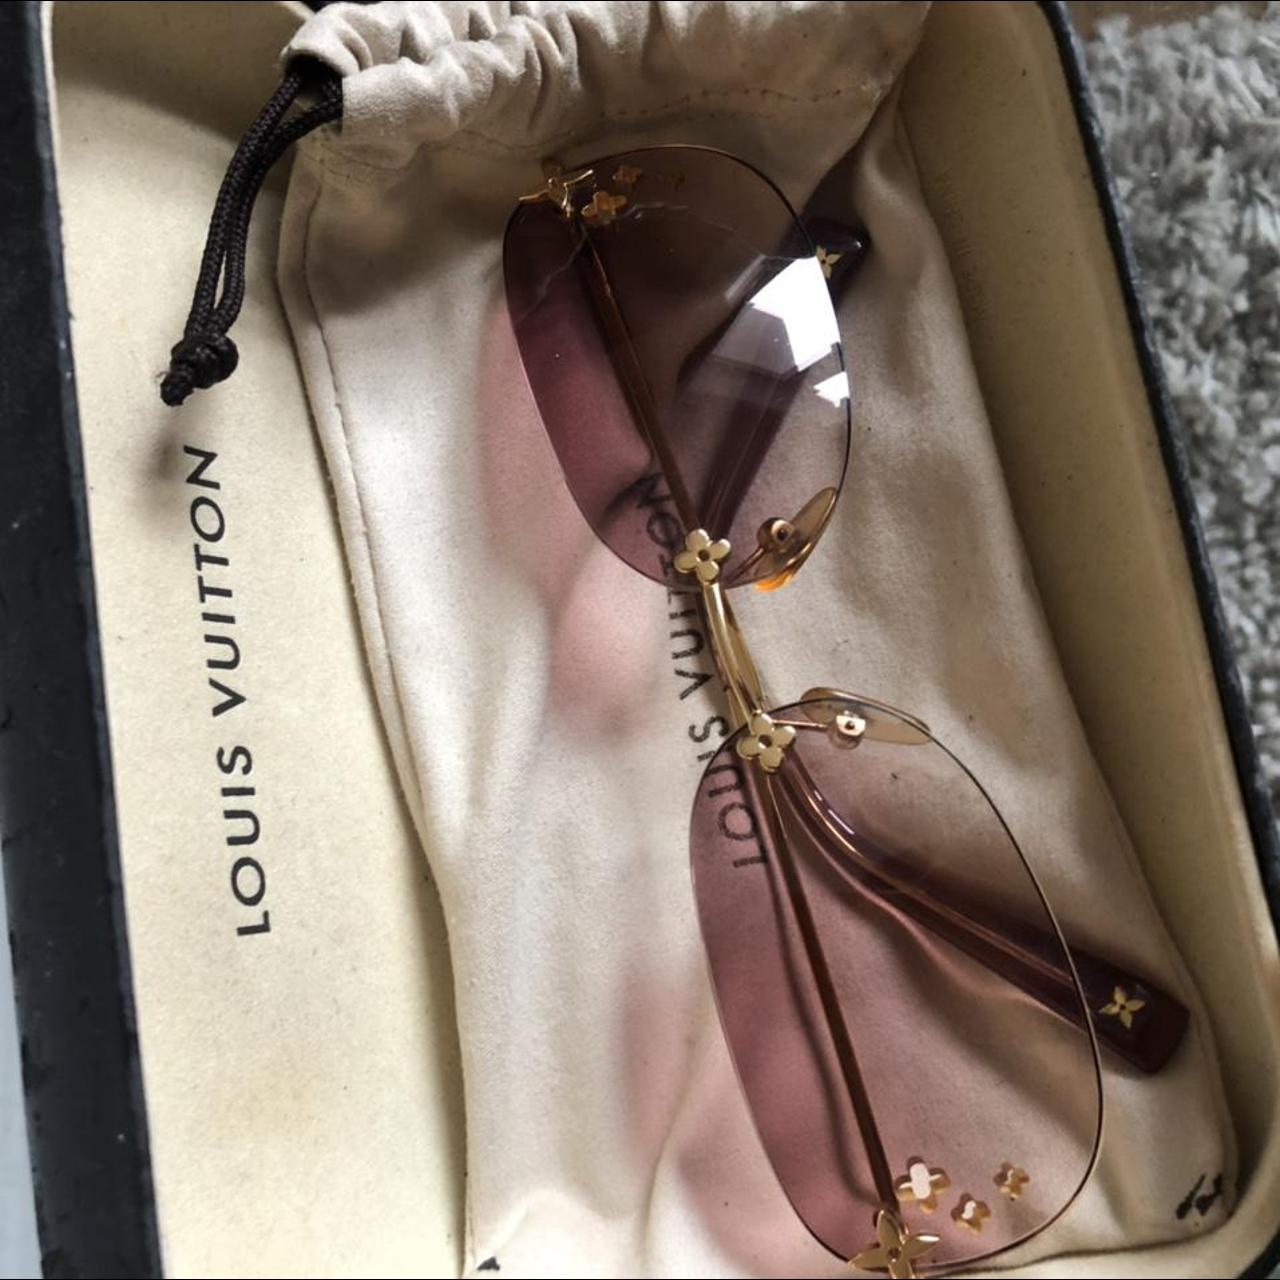 Authentic Louis Vuitton Sunglasses. Normal signs of - Depop